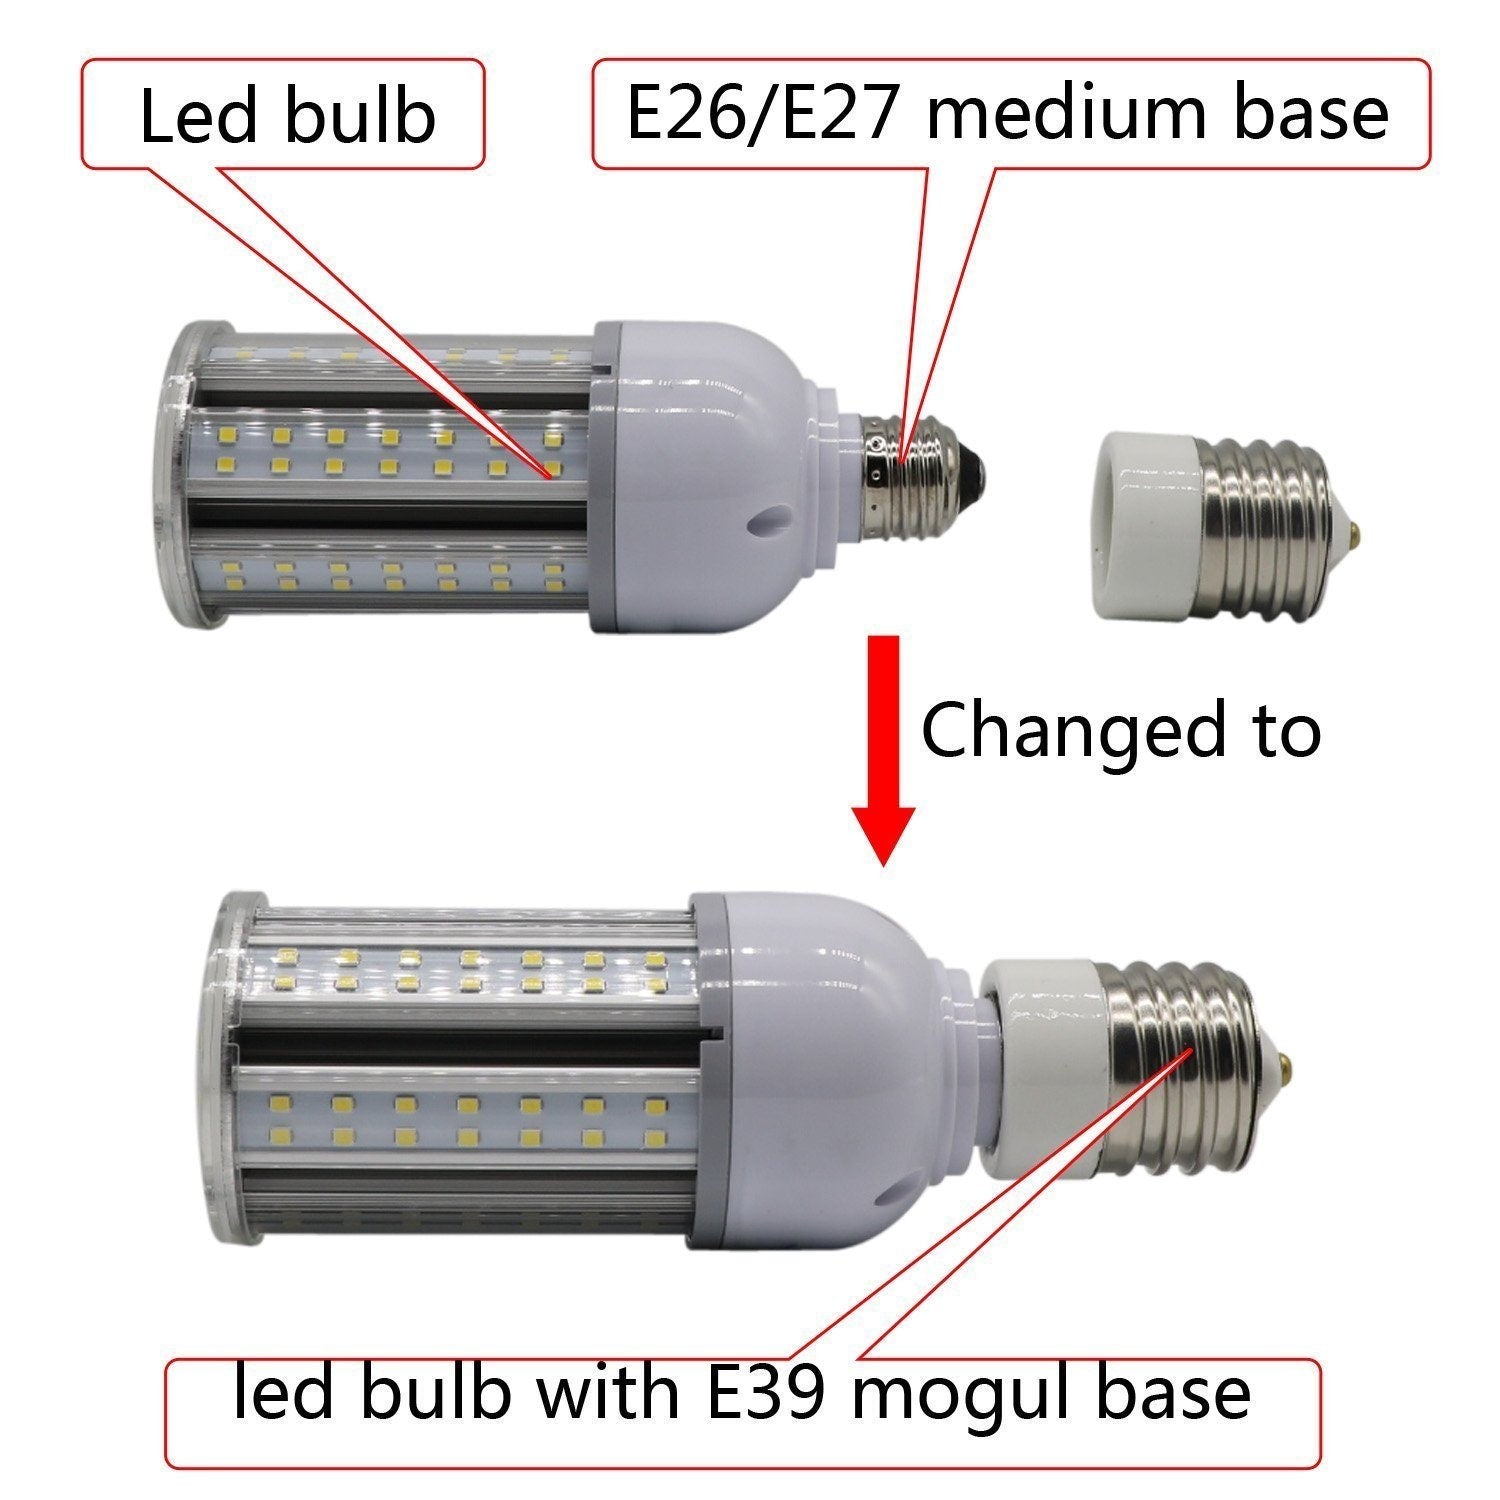 E17 à E27 Base Socket Ampoule lampe Holder Plug Adapter Converter